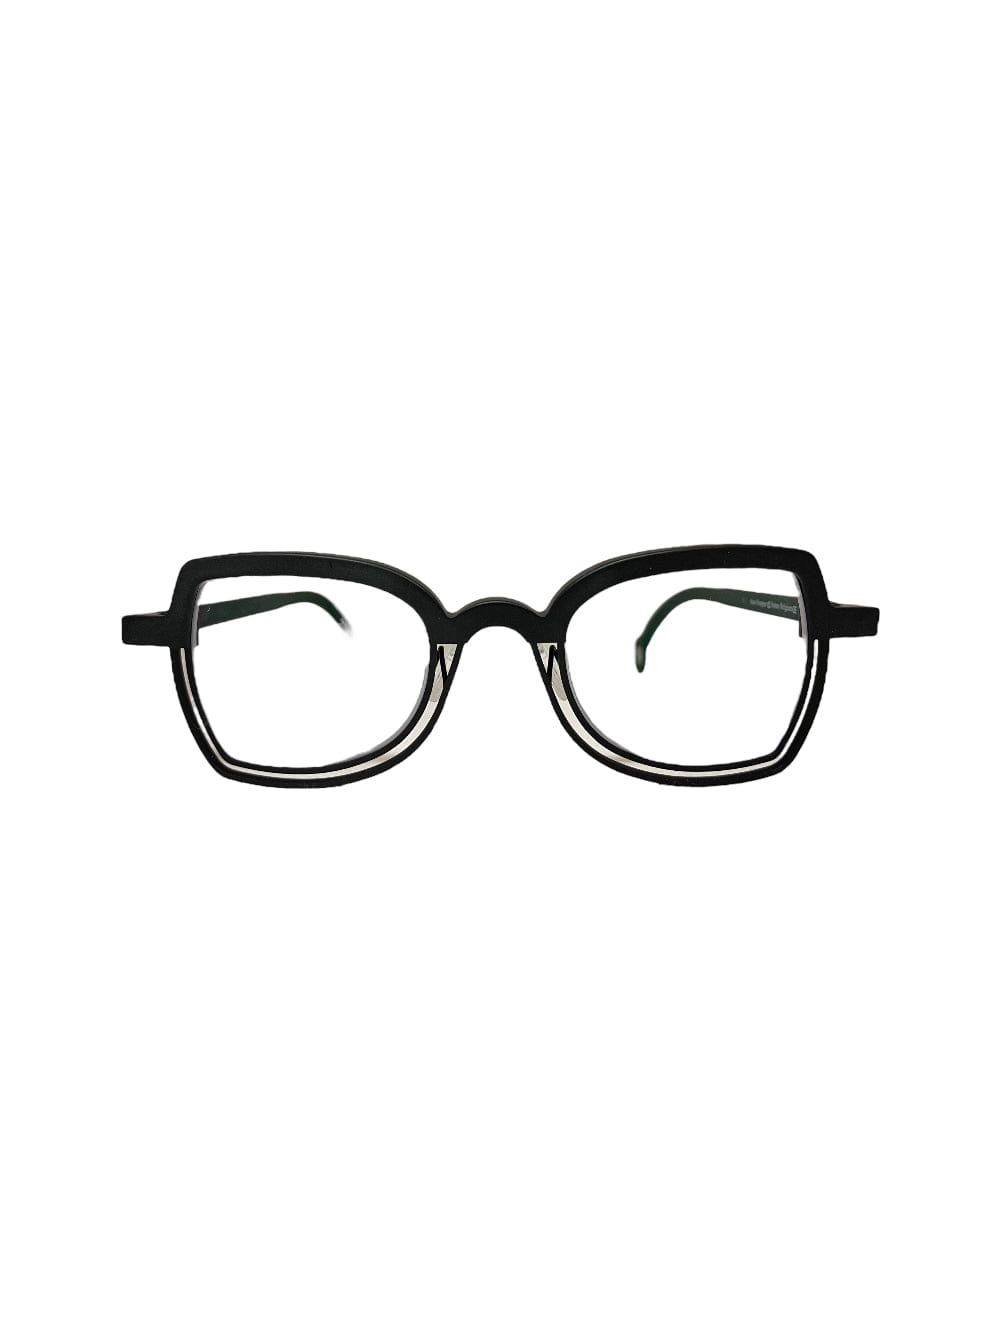 Theo Stopper Glasses